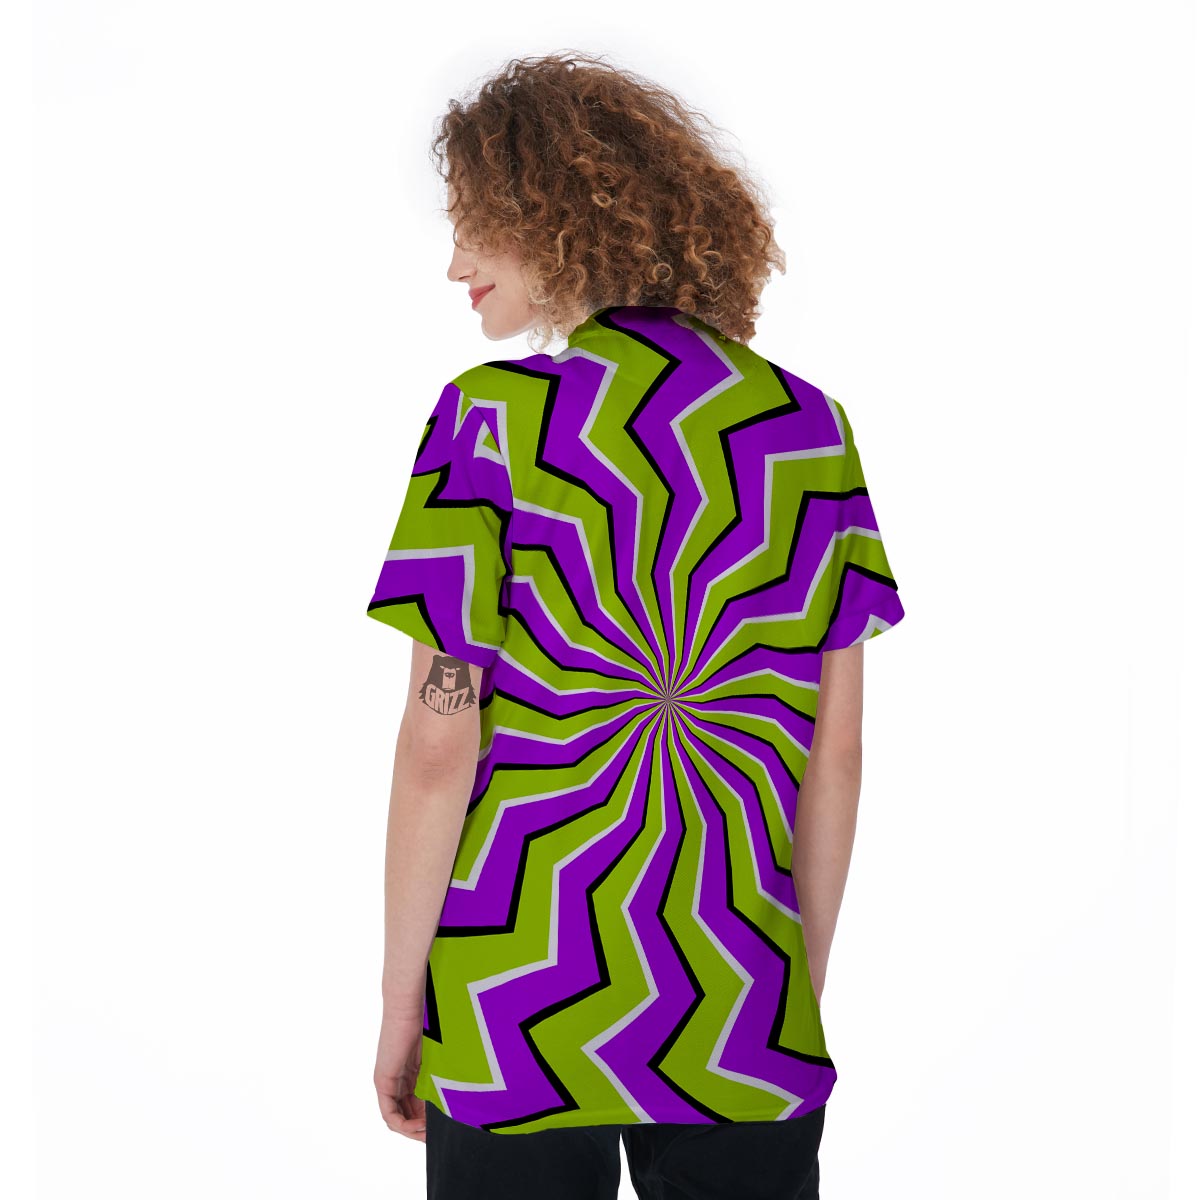 Zigzag Optical illusion Women's Golf Shirts-grizzshop